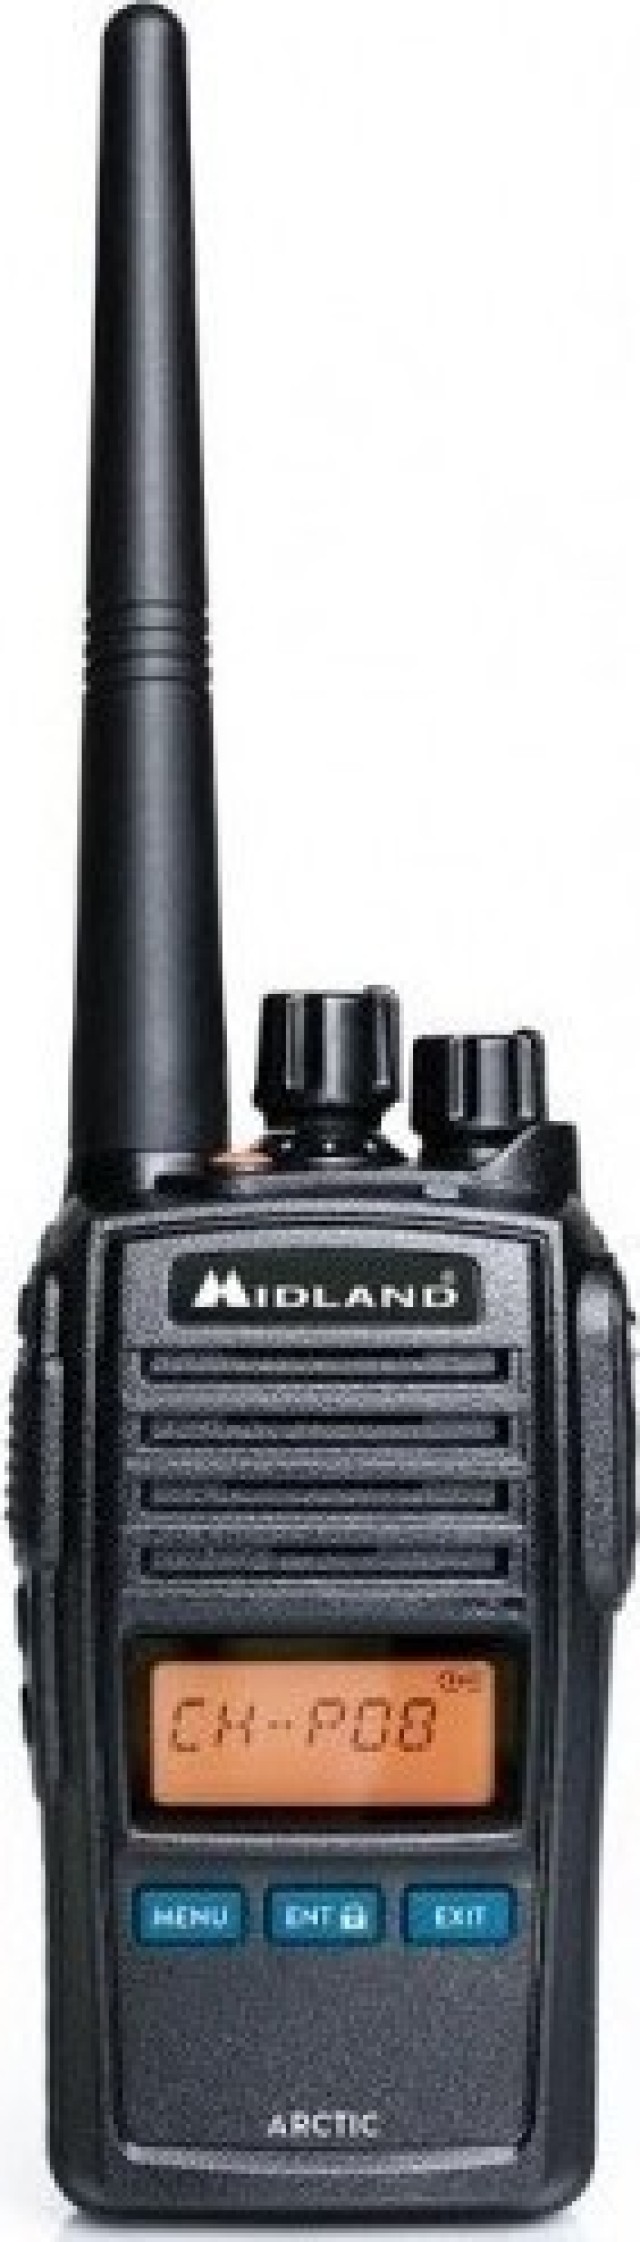 Midland ARCTIC Πομποδέκτης VHF Marine ισχύος 5 Watt